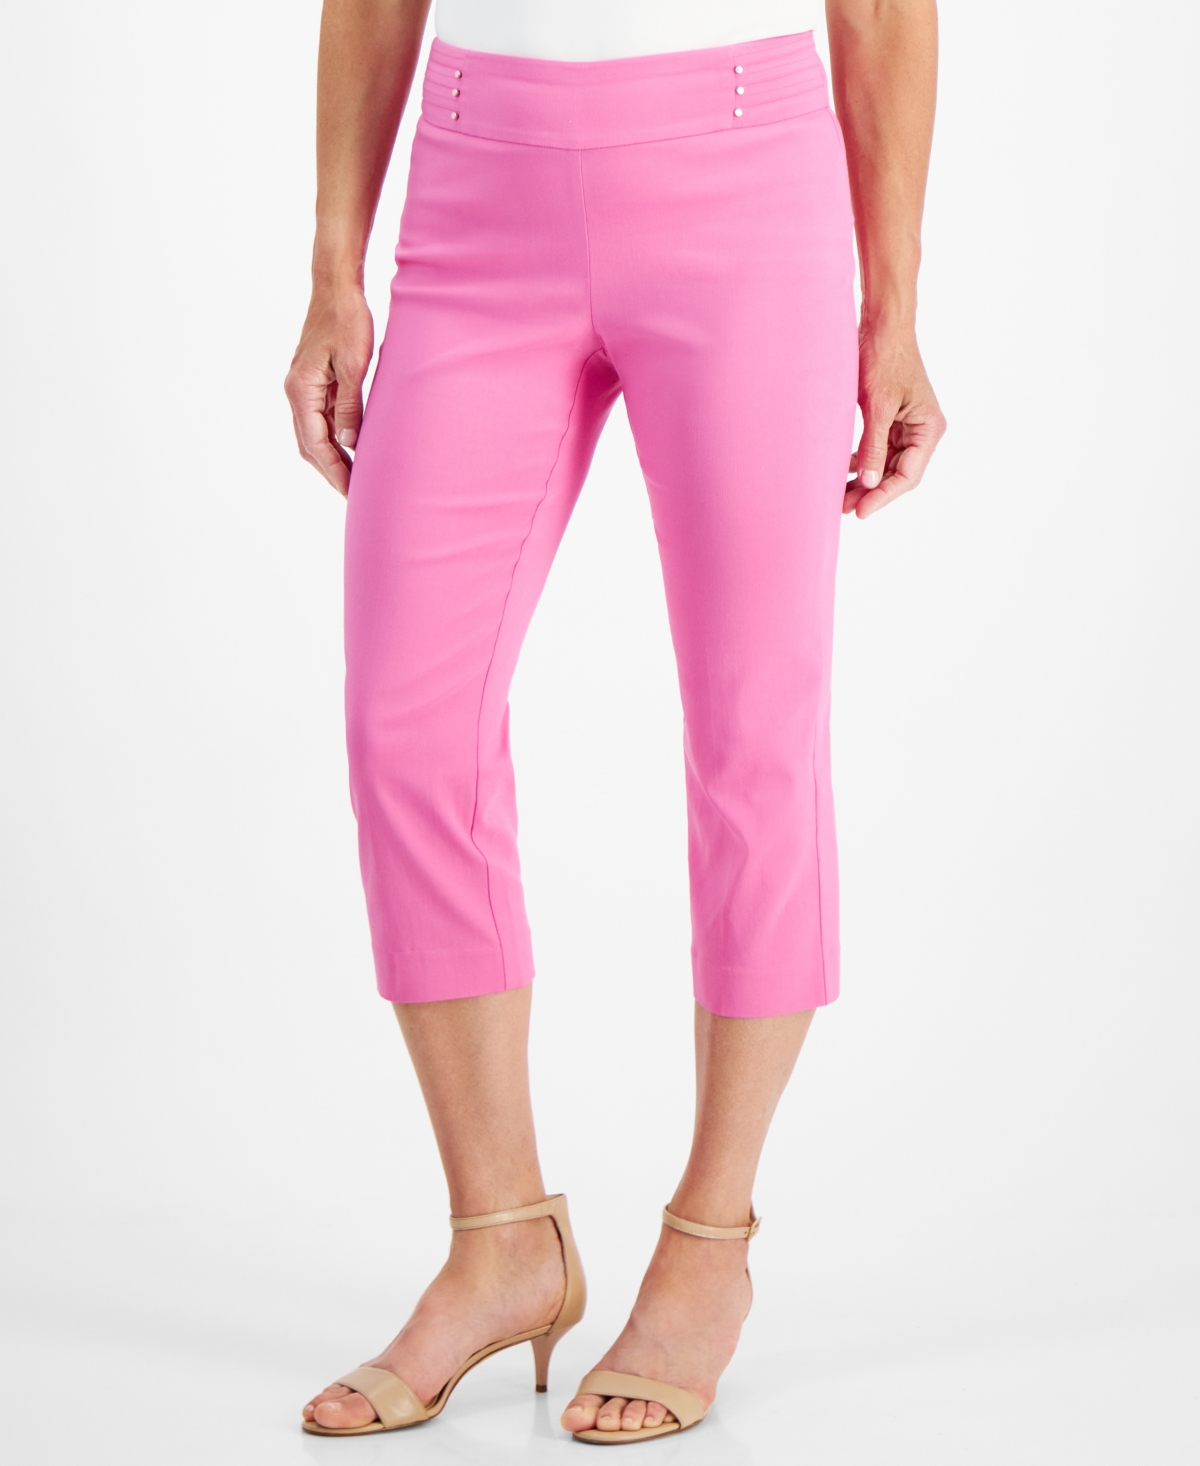 Jm Collection Petite Rivet-detail Capri Pants, Created For Macy's In Phlox Pink